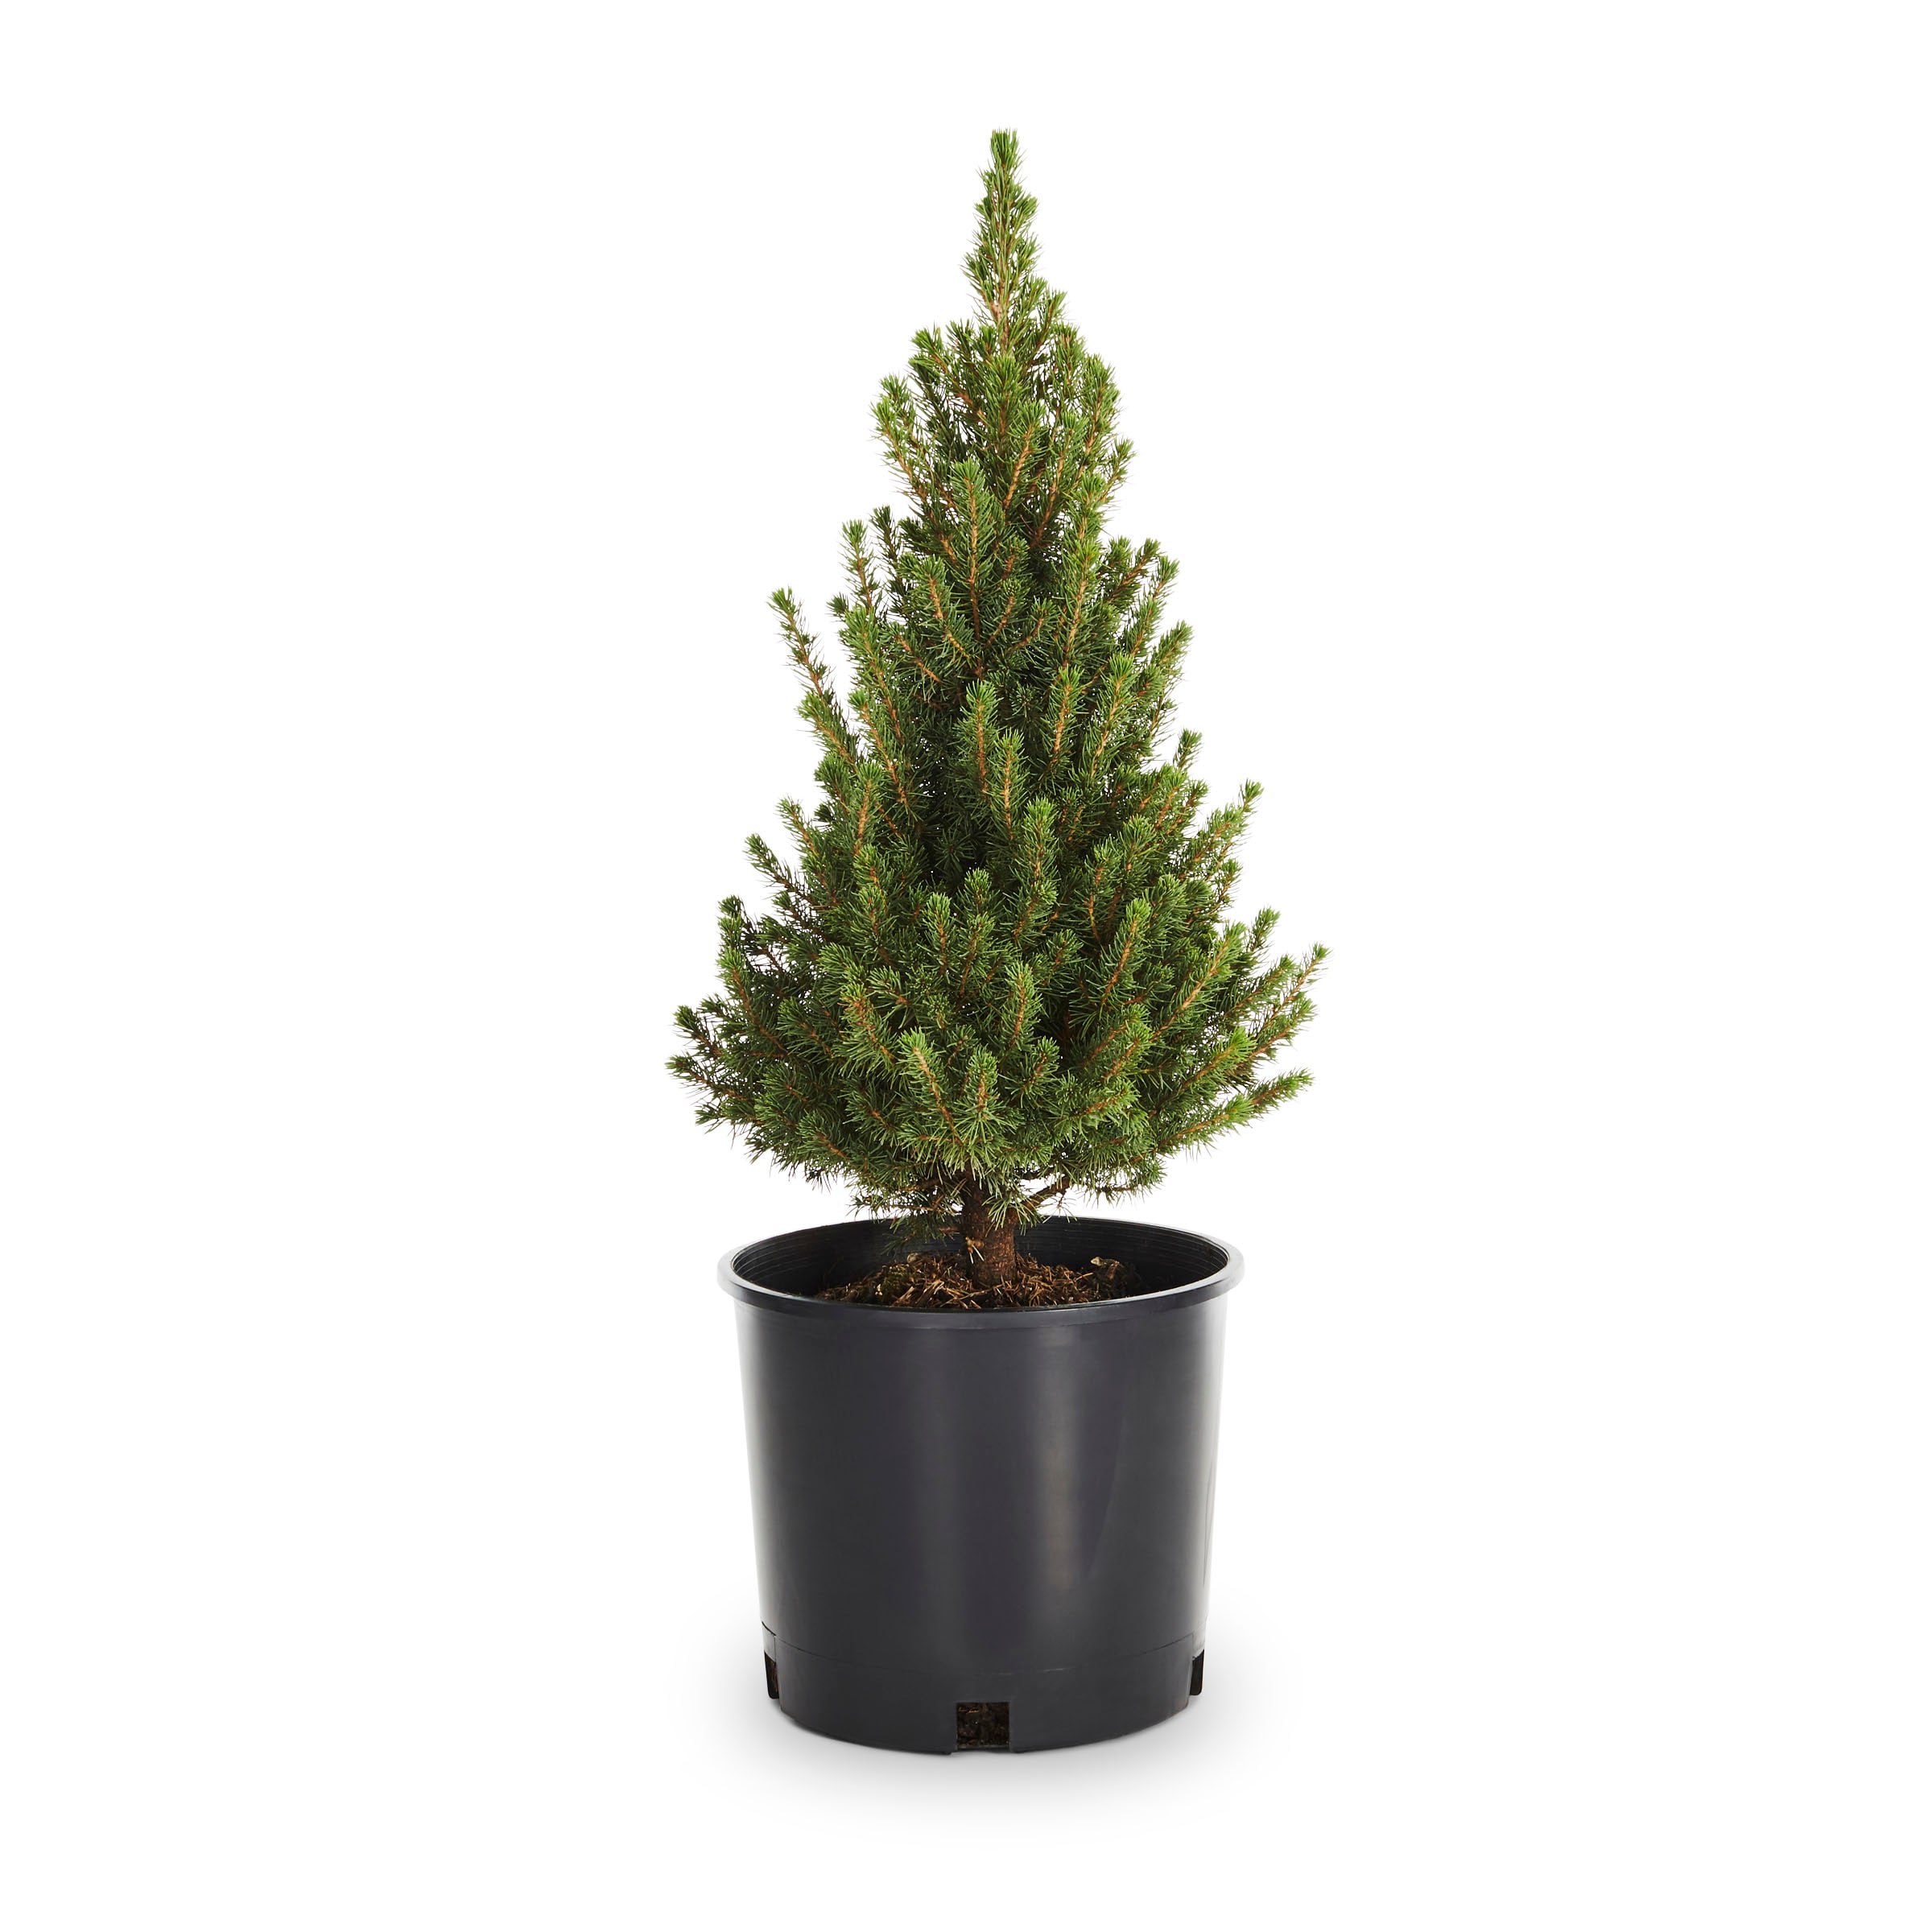 dwarf alberta spruce feature shrub in 2.25-gallon (s) pot in the